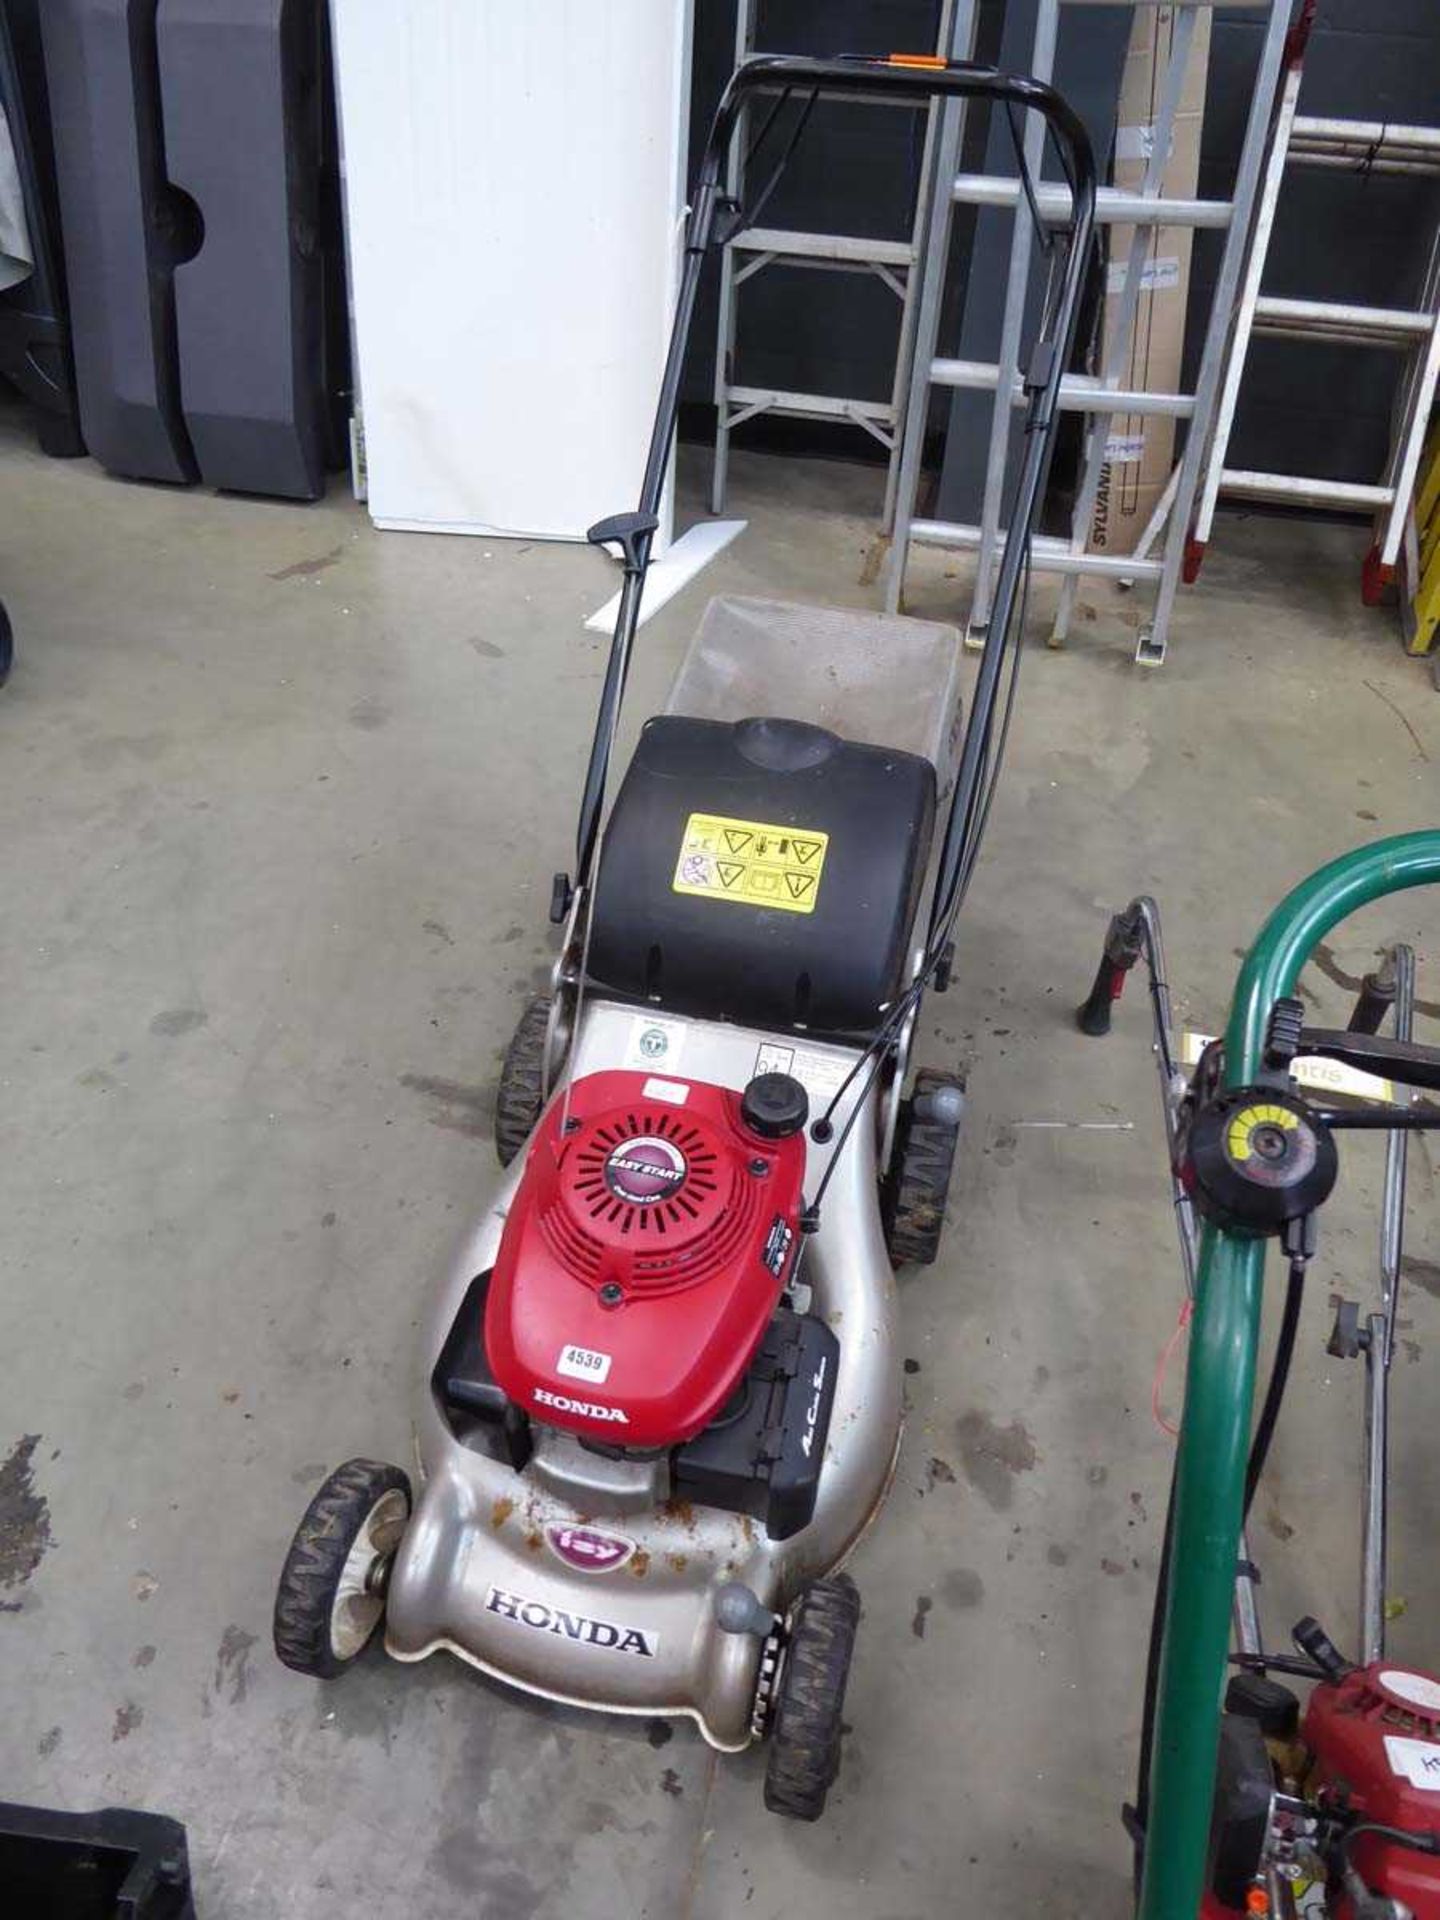 Honda Izzy petrol powered rotary mower with grass box